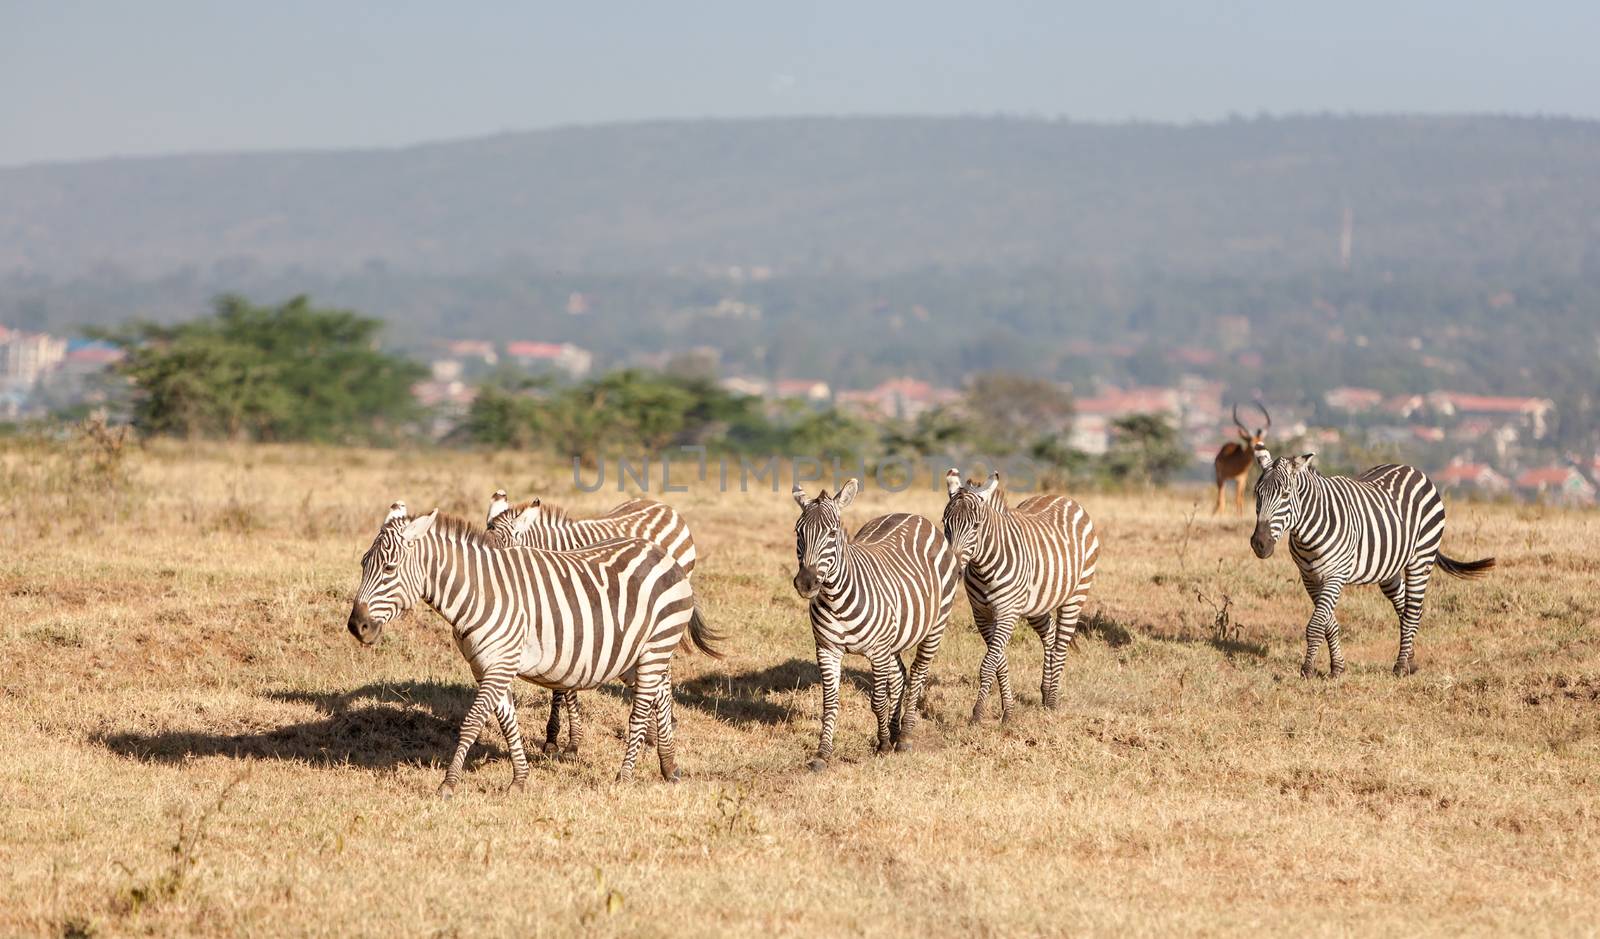 Zebras in the grasslands  by master1305